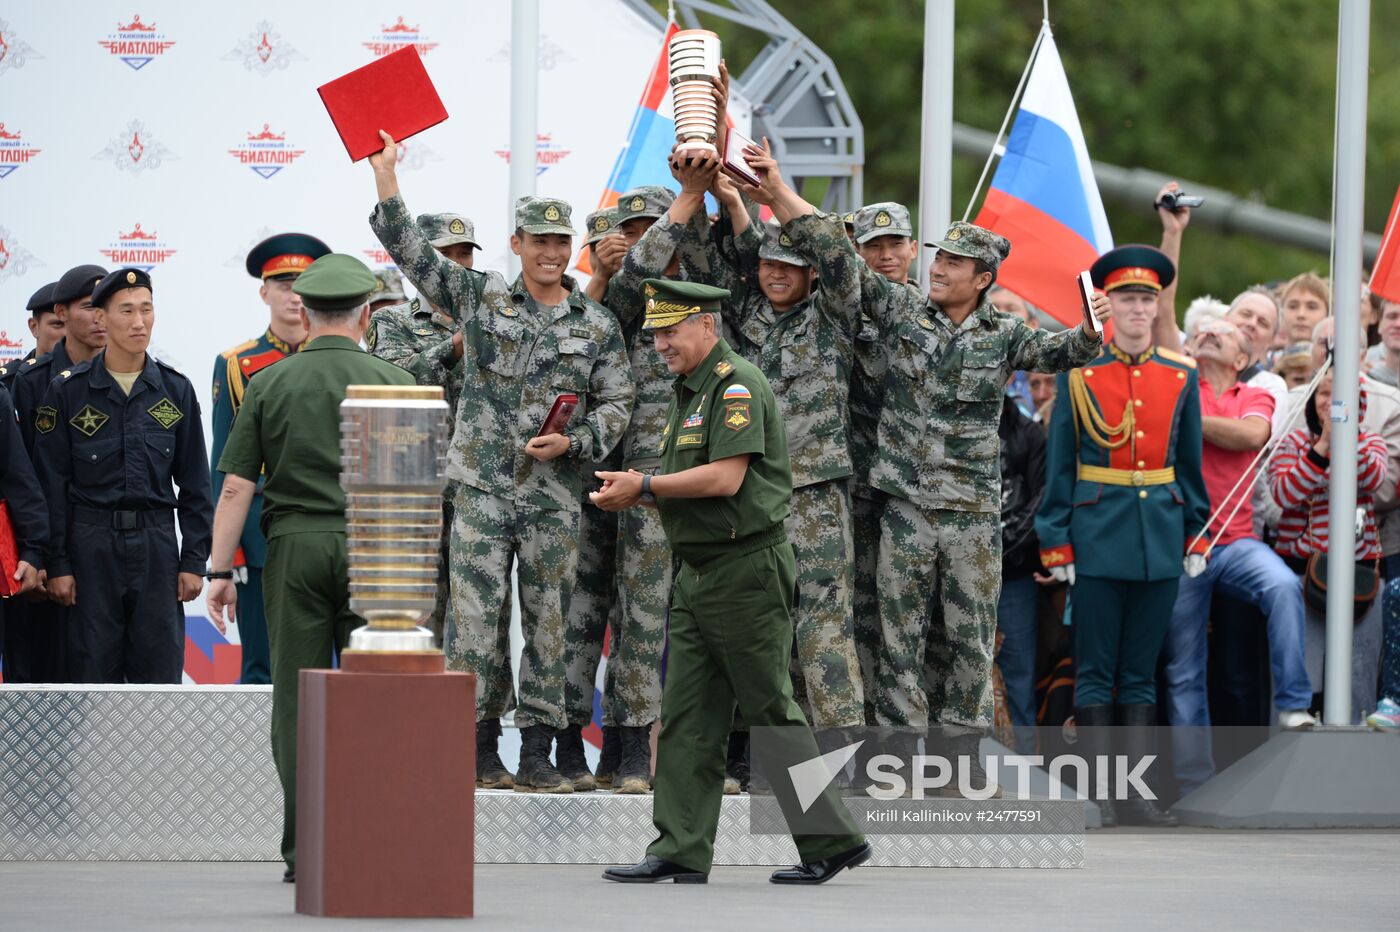 Tank Biathlon 2014 wraps up